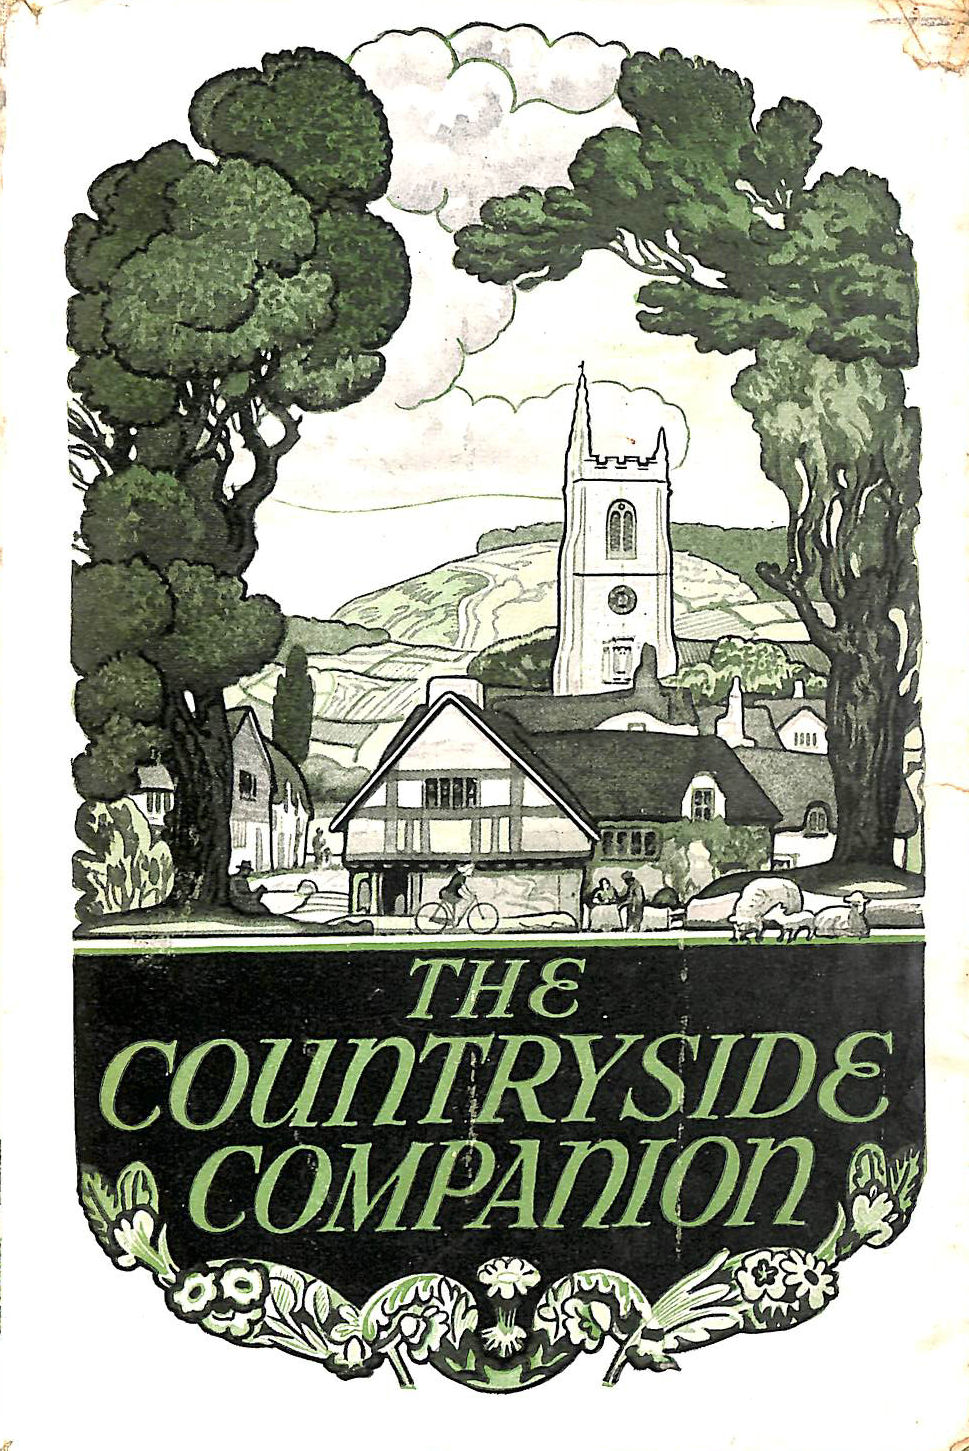 TOM STEPHENSON: [EDITOR] - The Countryside Companion